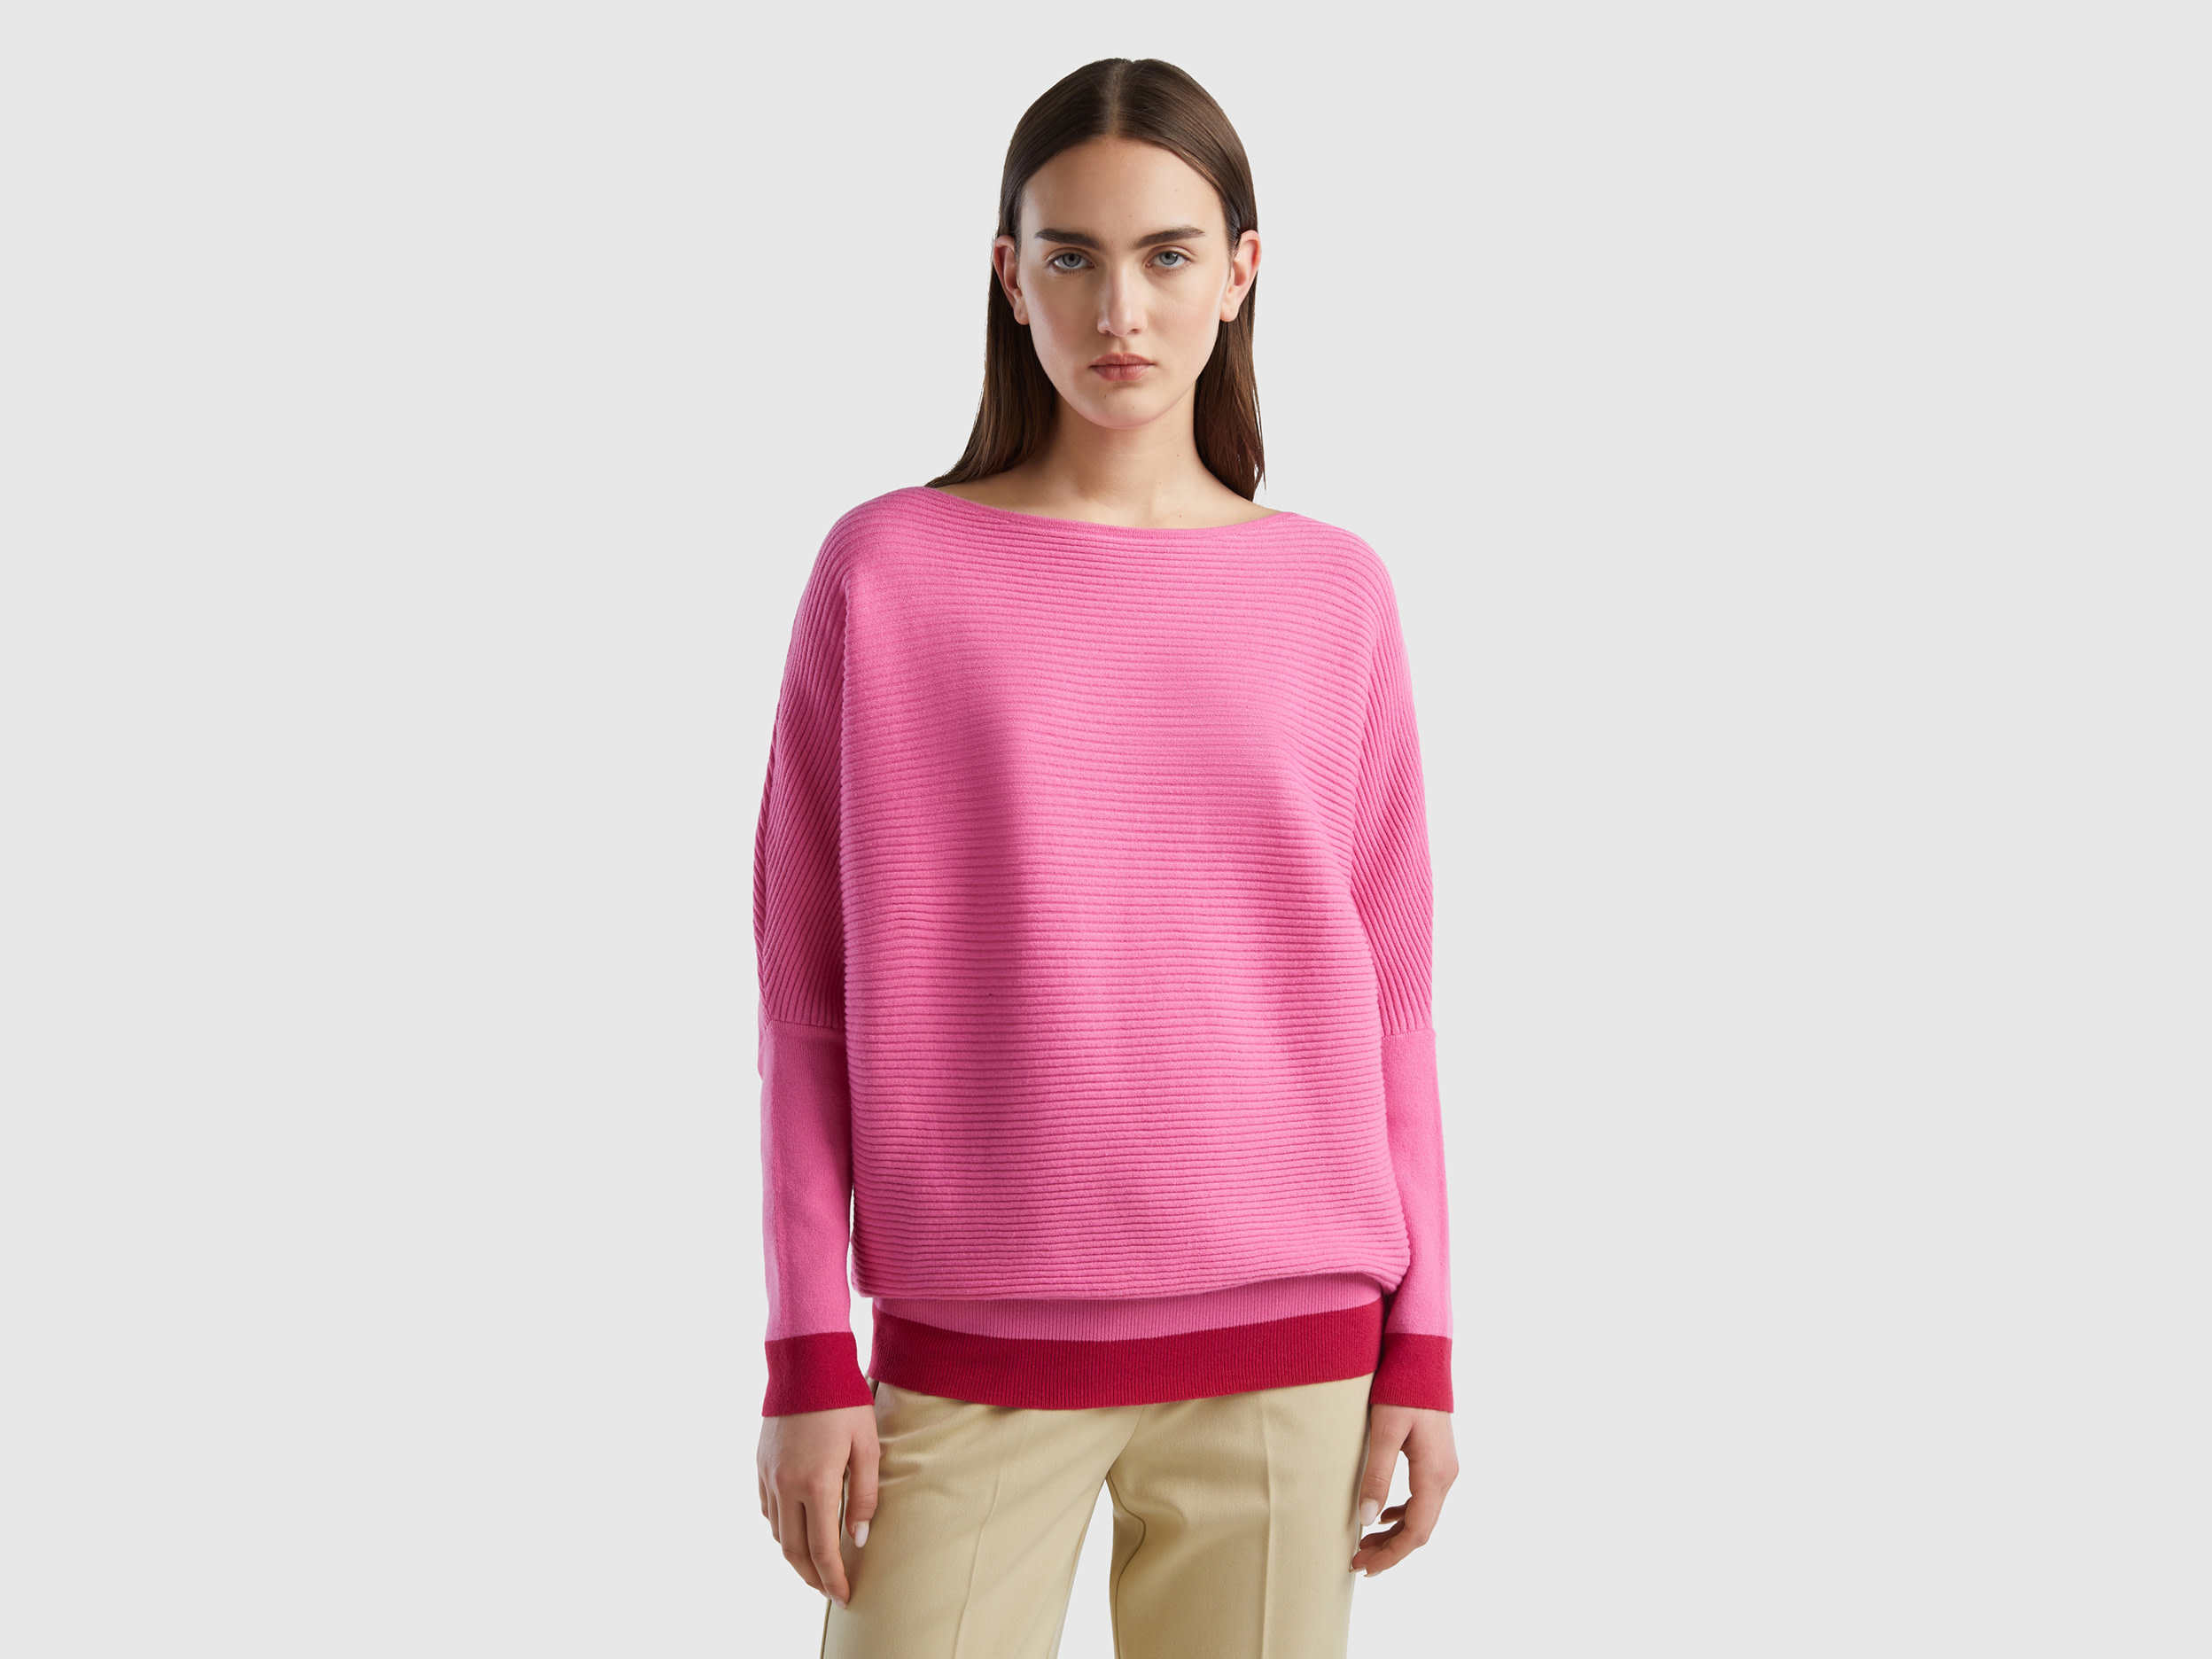 Benetton, Boat Neck Sweater, size XS-S, Pink, Women